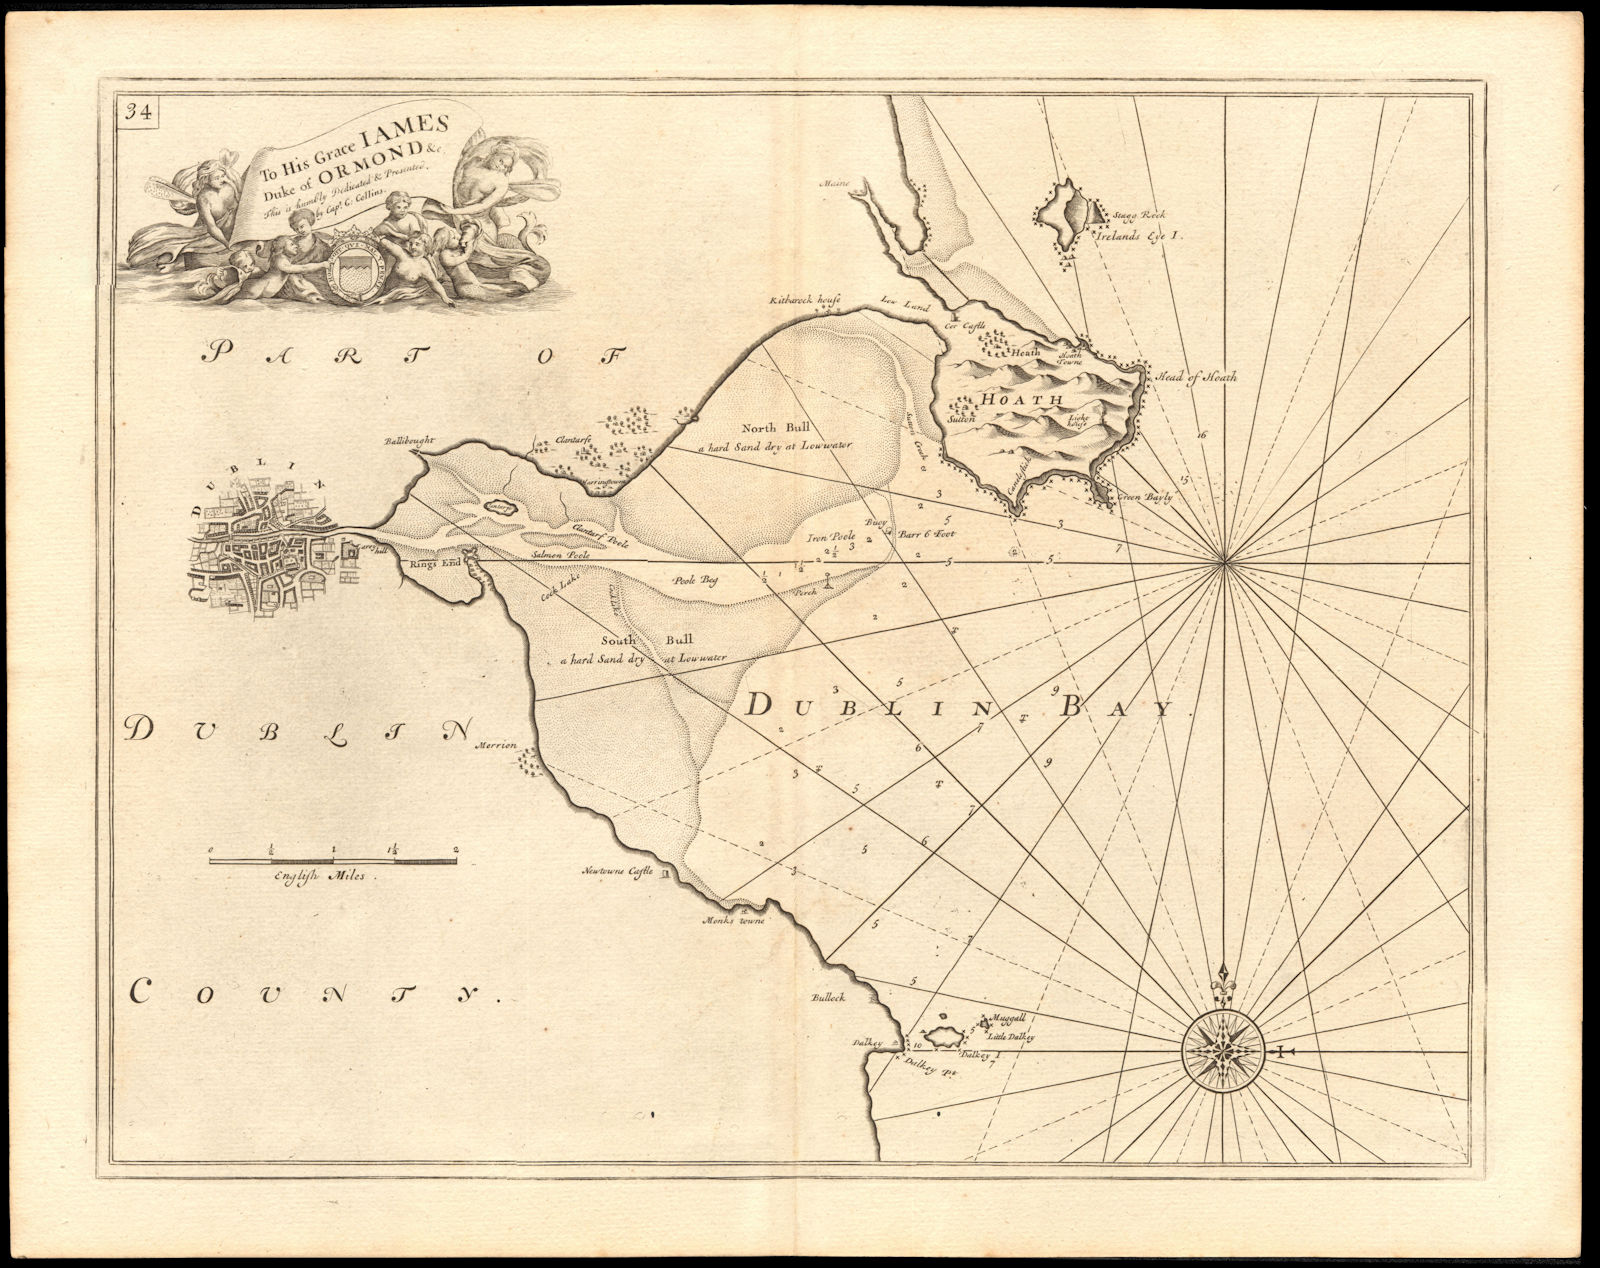 DUBLIN BAY sea chart. Howth Head North Bull Clontarf Merrion. COLLINS c1774 map